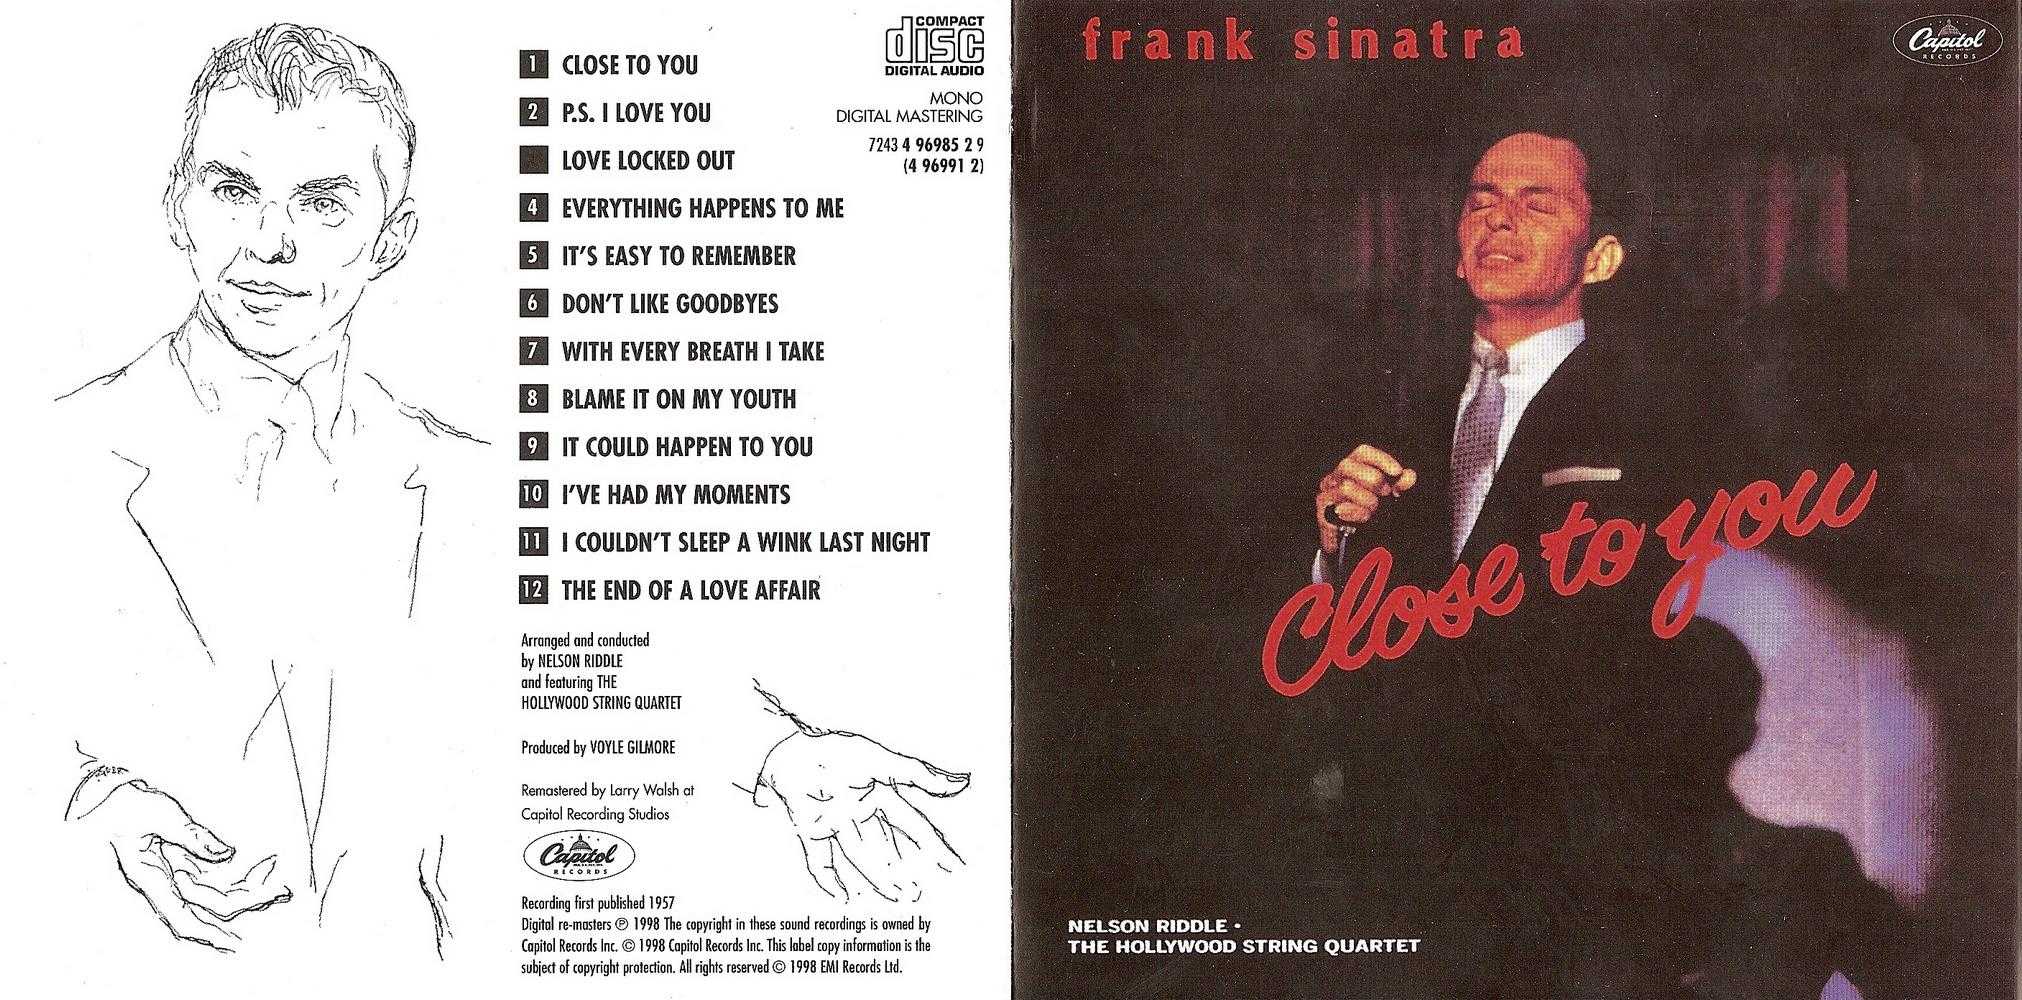 Фрэнк синатра love me. Frank Sinatra "close to you". Frank Sinatra 1945. Sinatra - Sinatra 1988 обложка. Frank Sinatra close to you картинки.